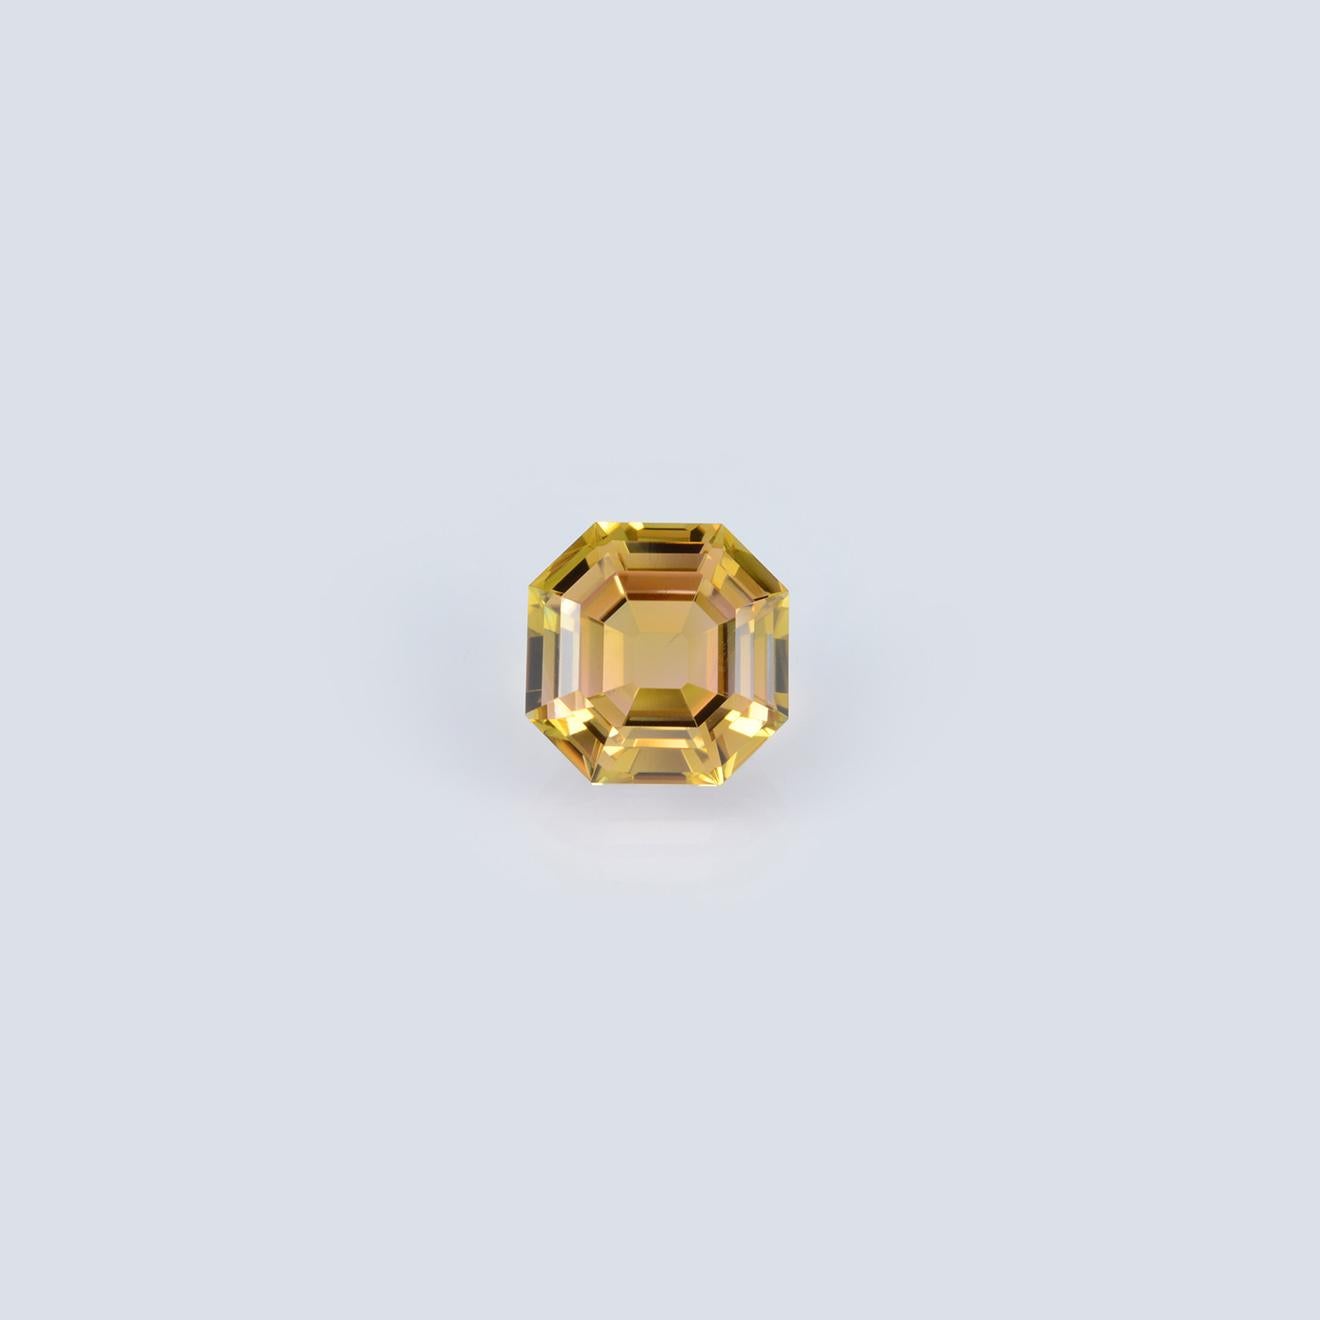 Contemporary Bicolor Tourmaline Ring Gem 4.47 Carat Asscher Cut Loose Gemstone